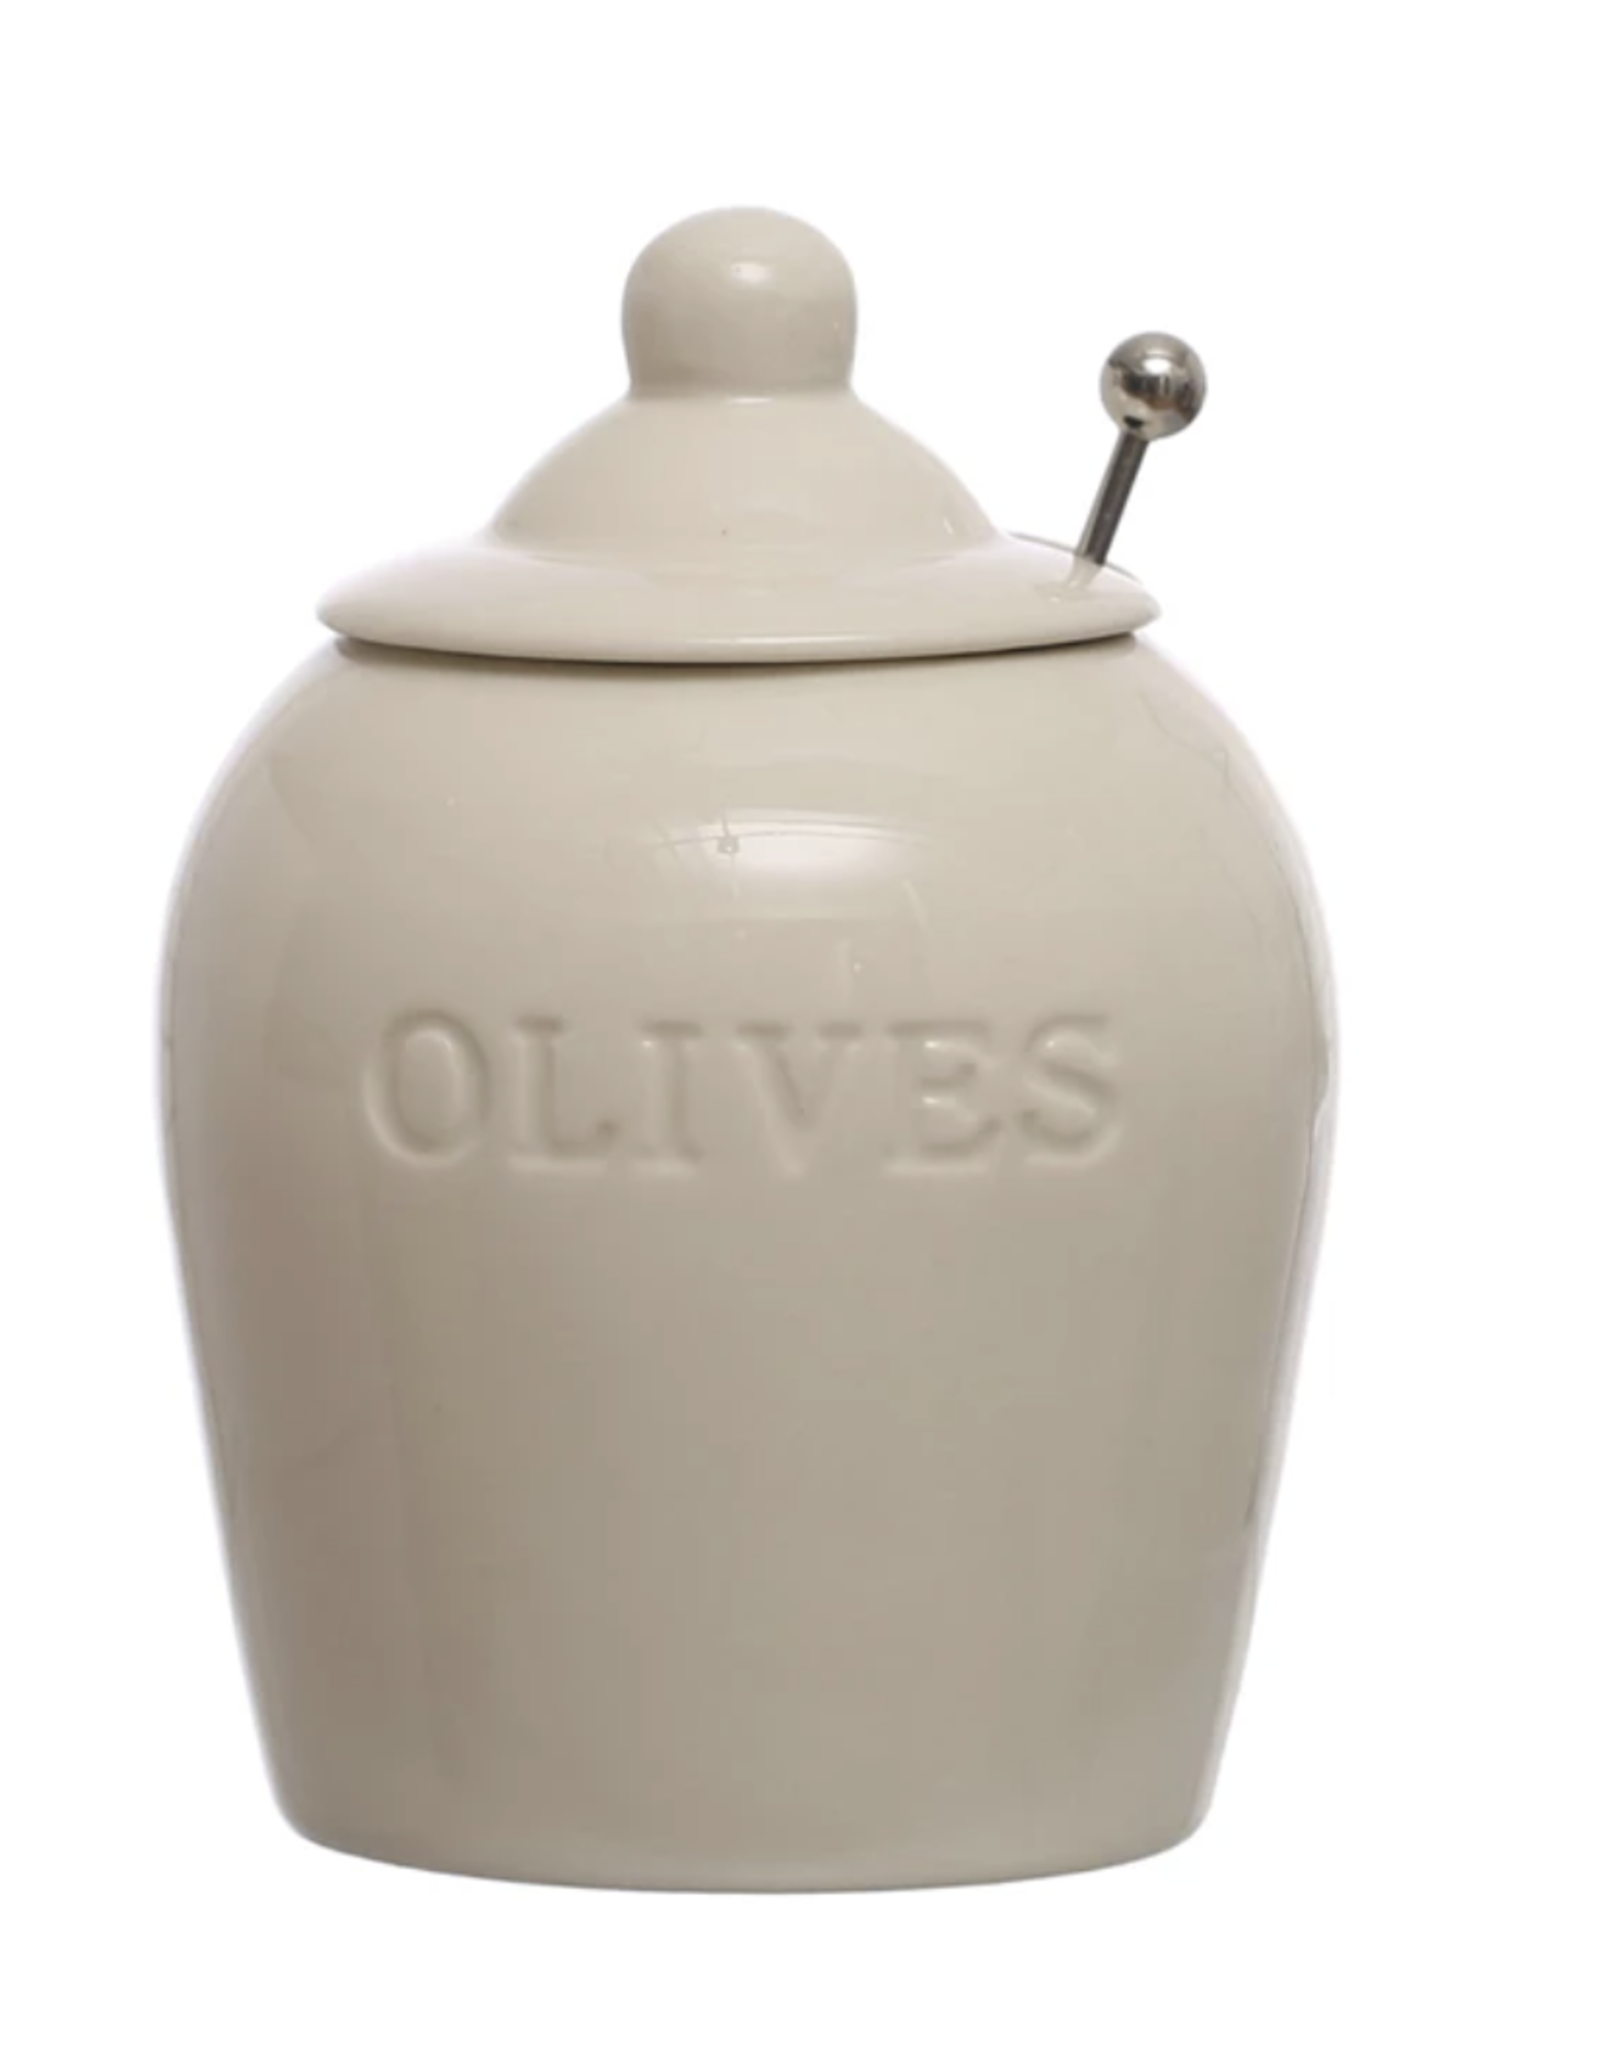 Debossed Stoneware Jar w/ Slotted Spoon "Olives"